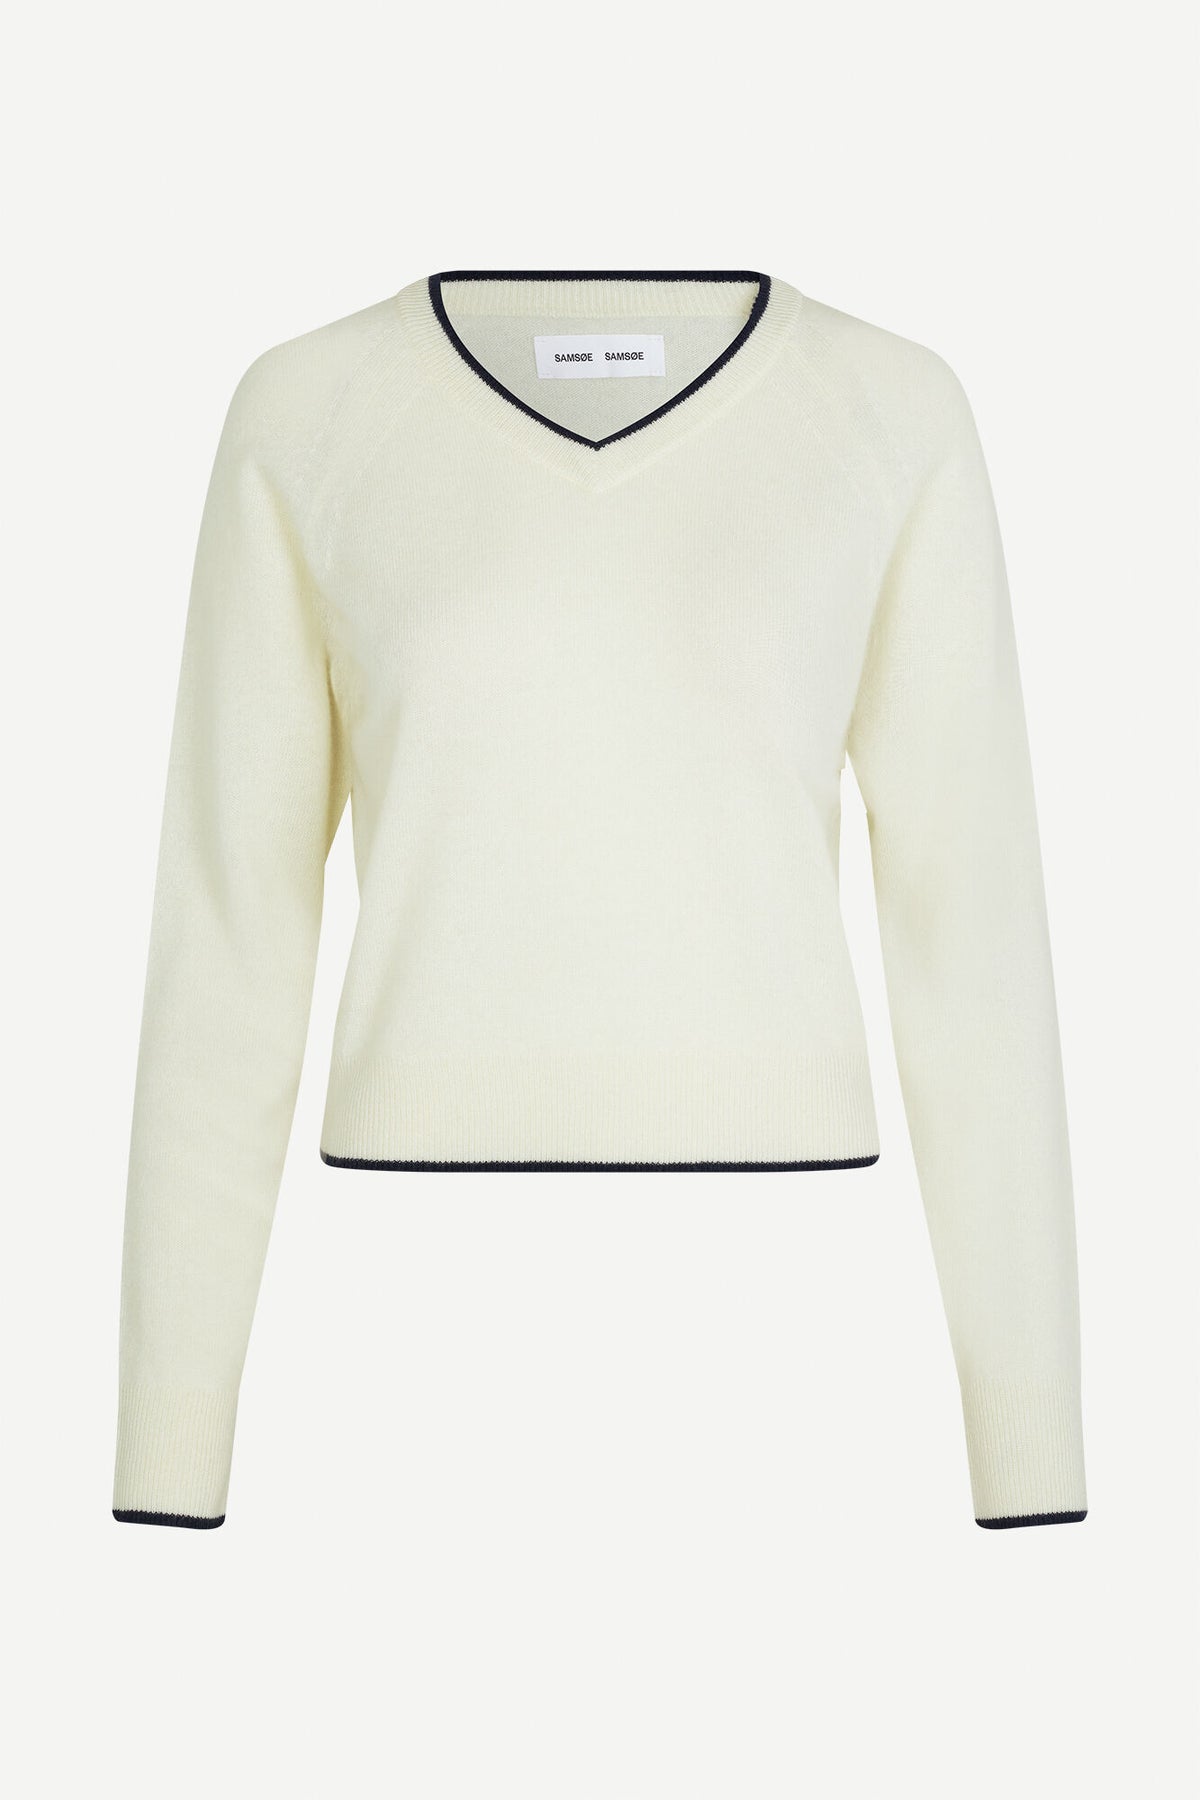 Winter white cashmere V neck  long sleeved jumper with navy trim